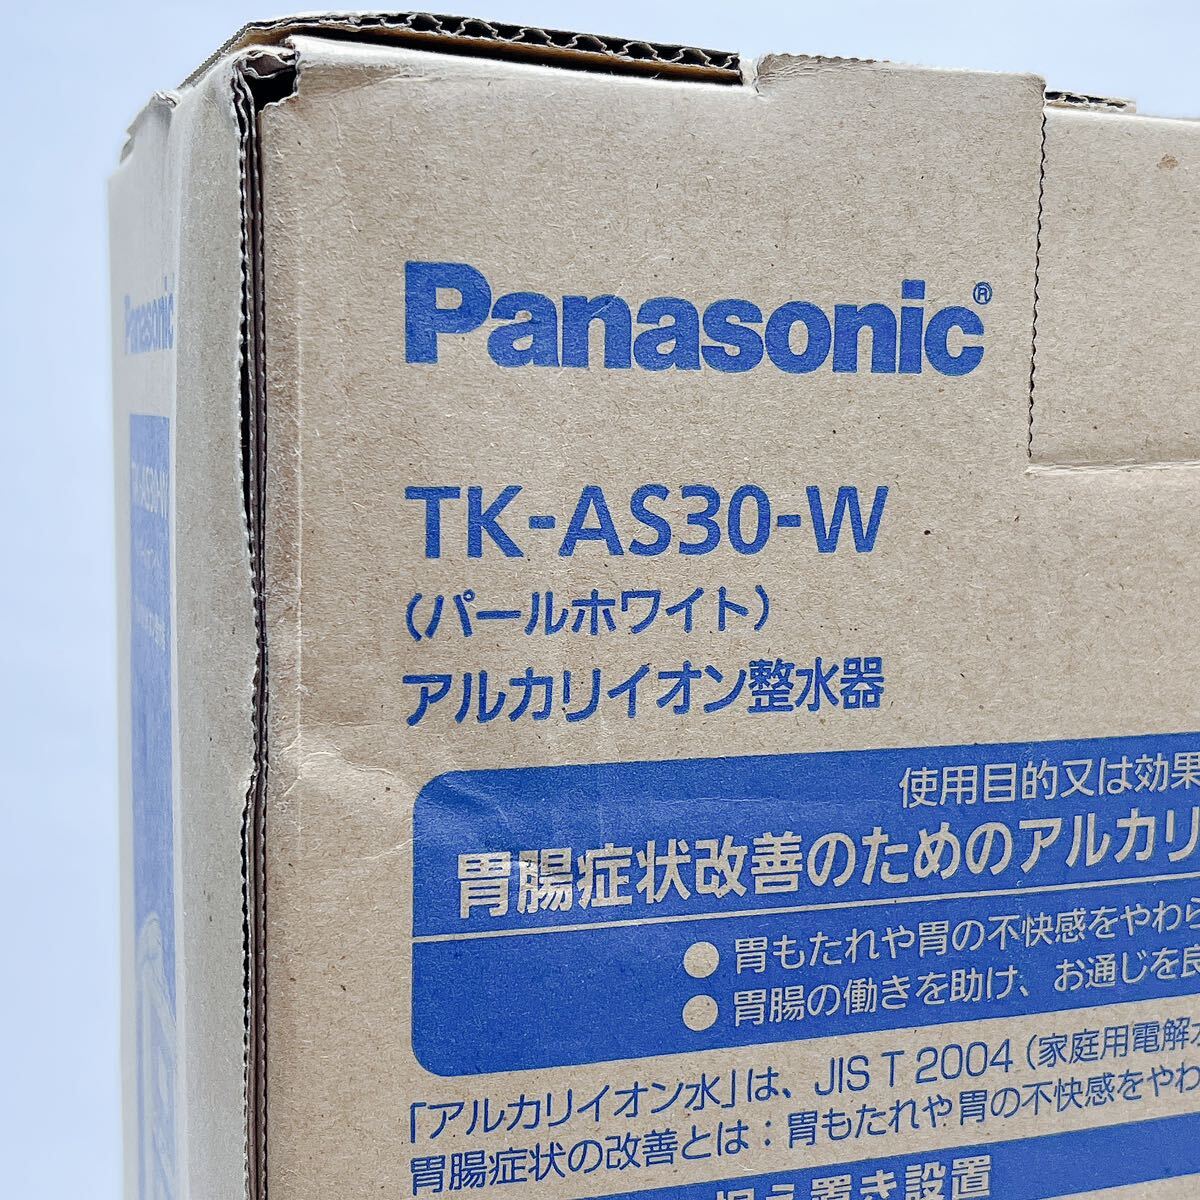 【S1】未使用 TK-AS30-W Panasonic アルカリイオン整水器 パナソニック _画像3